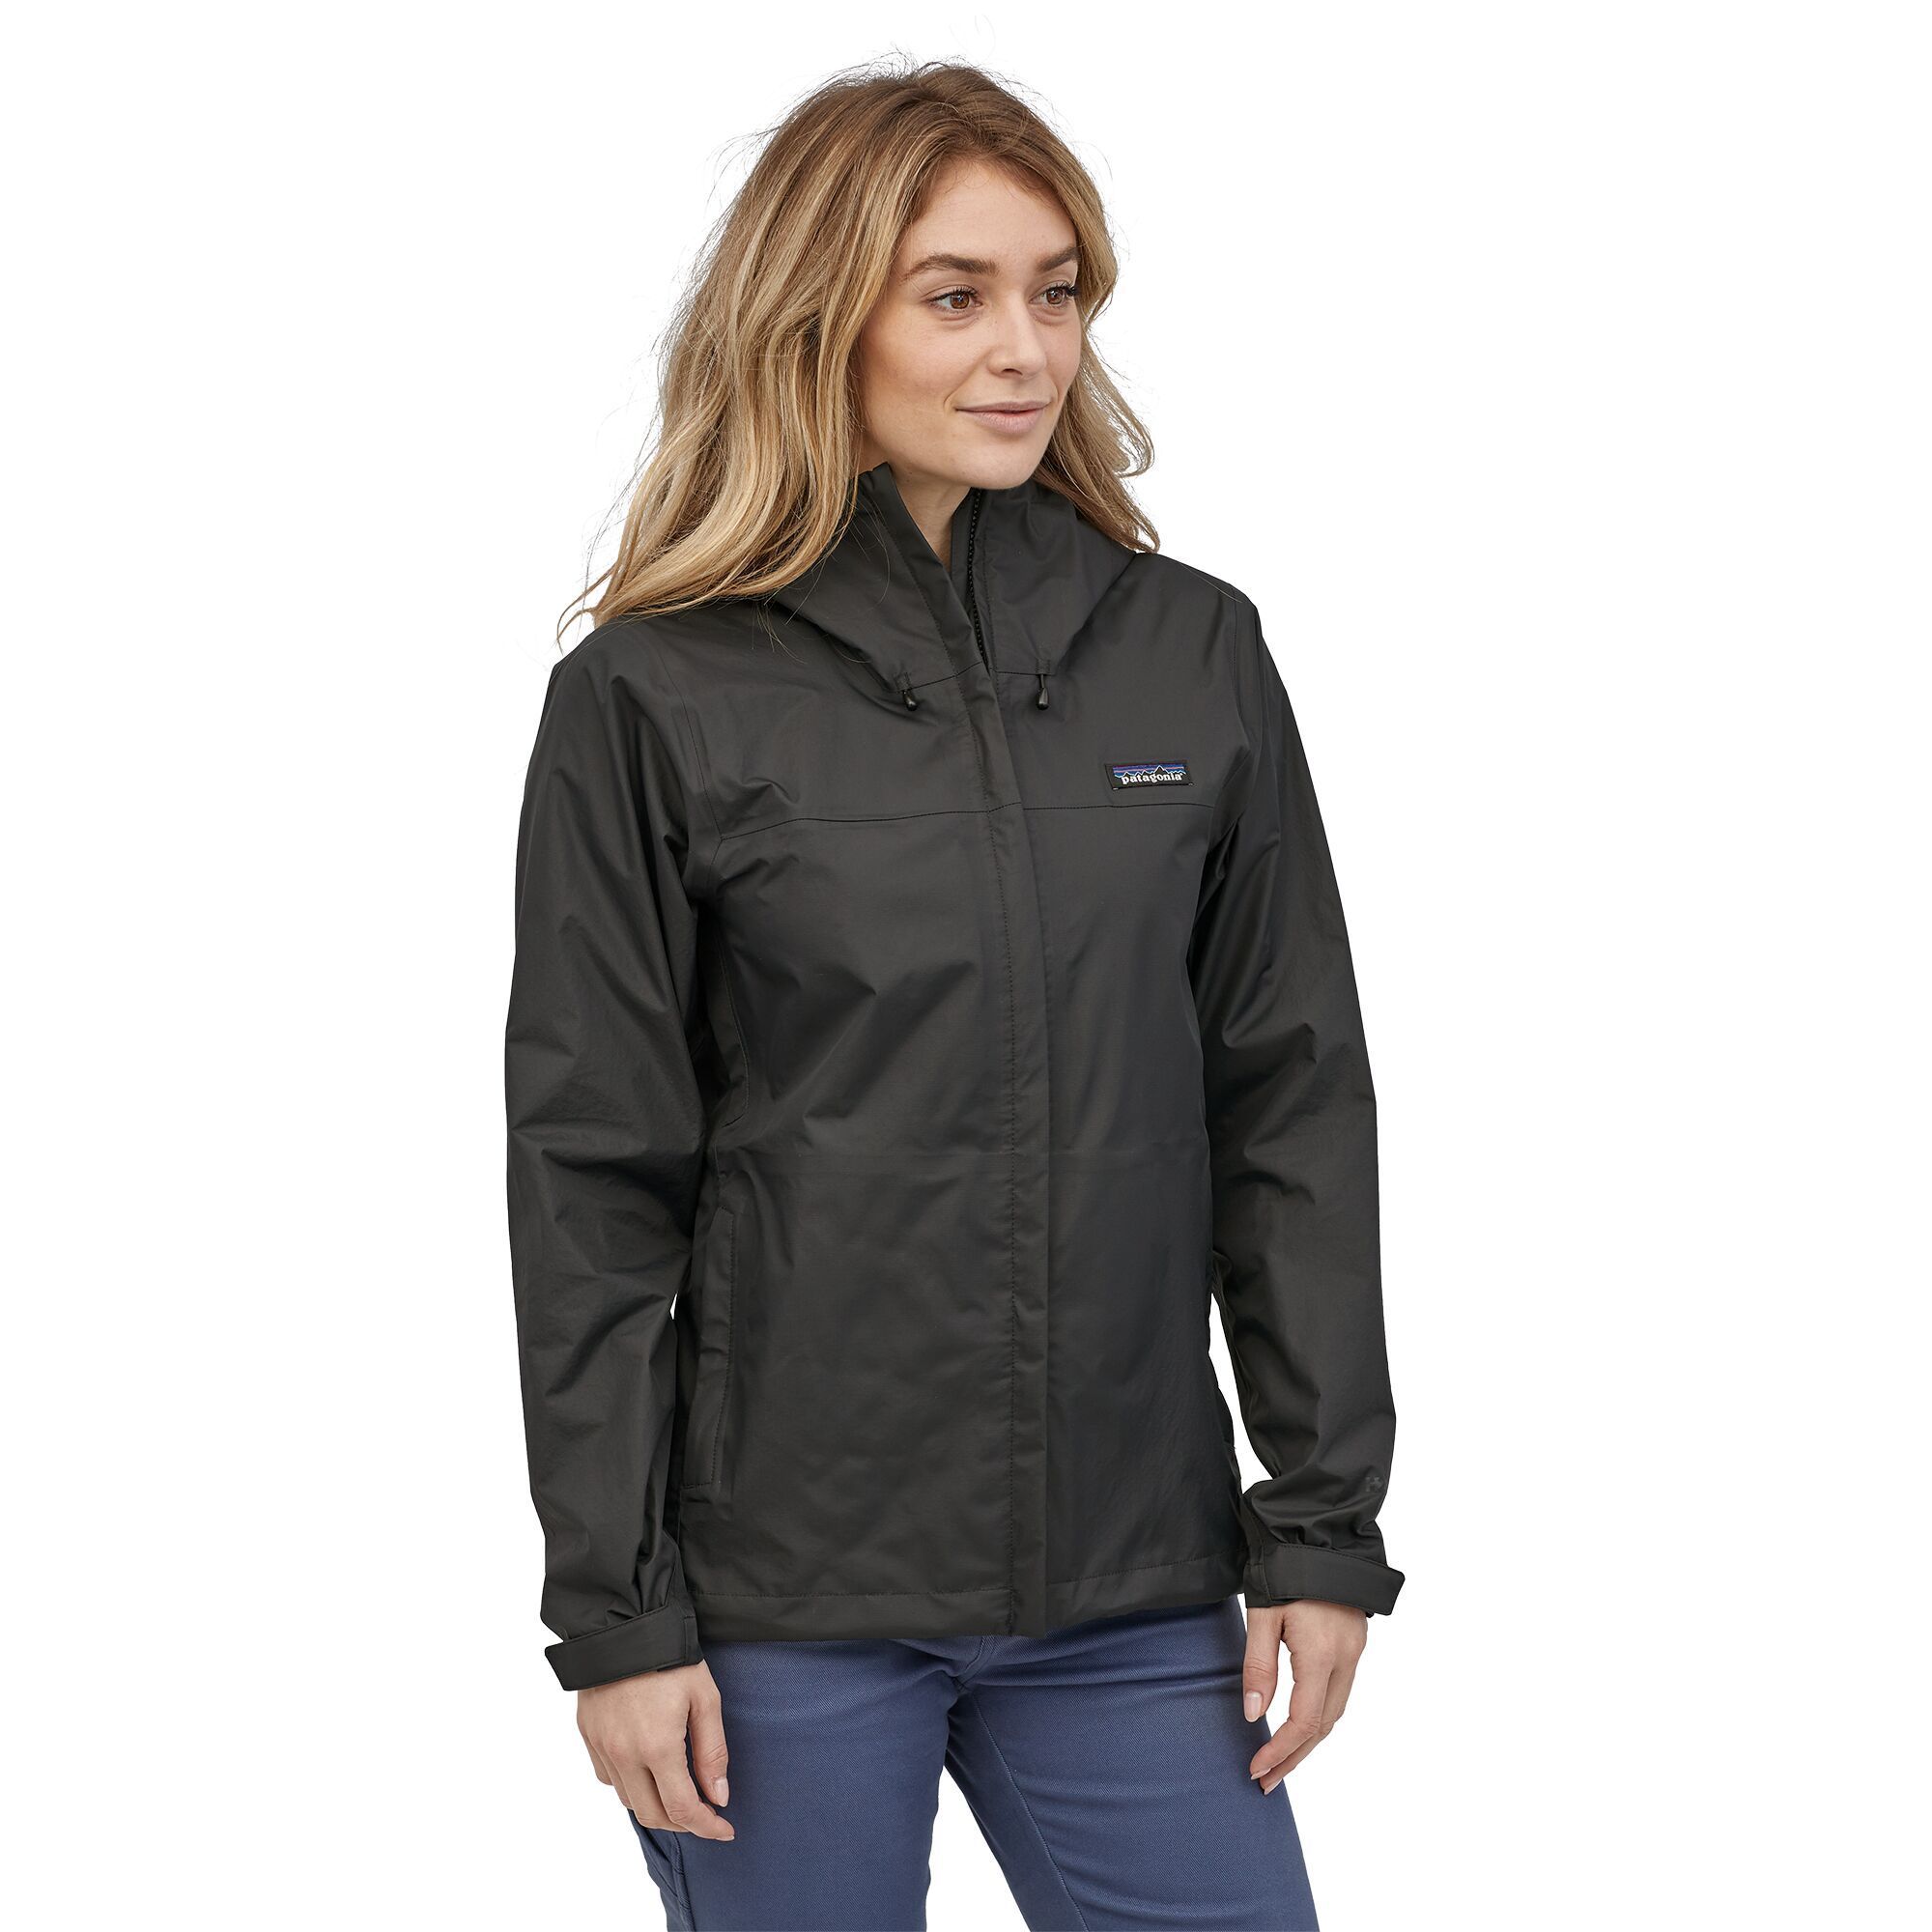 Patagonia Women's Torrentshell 3-layer Jacket - 100% Recycled Nylon, Black / S